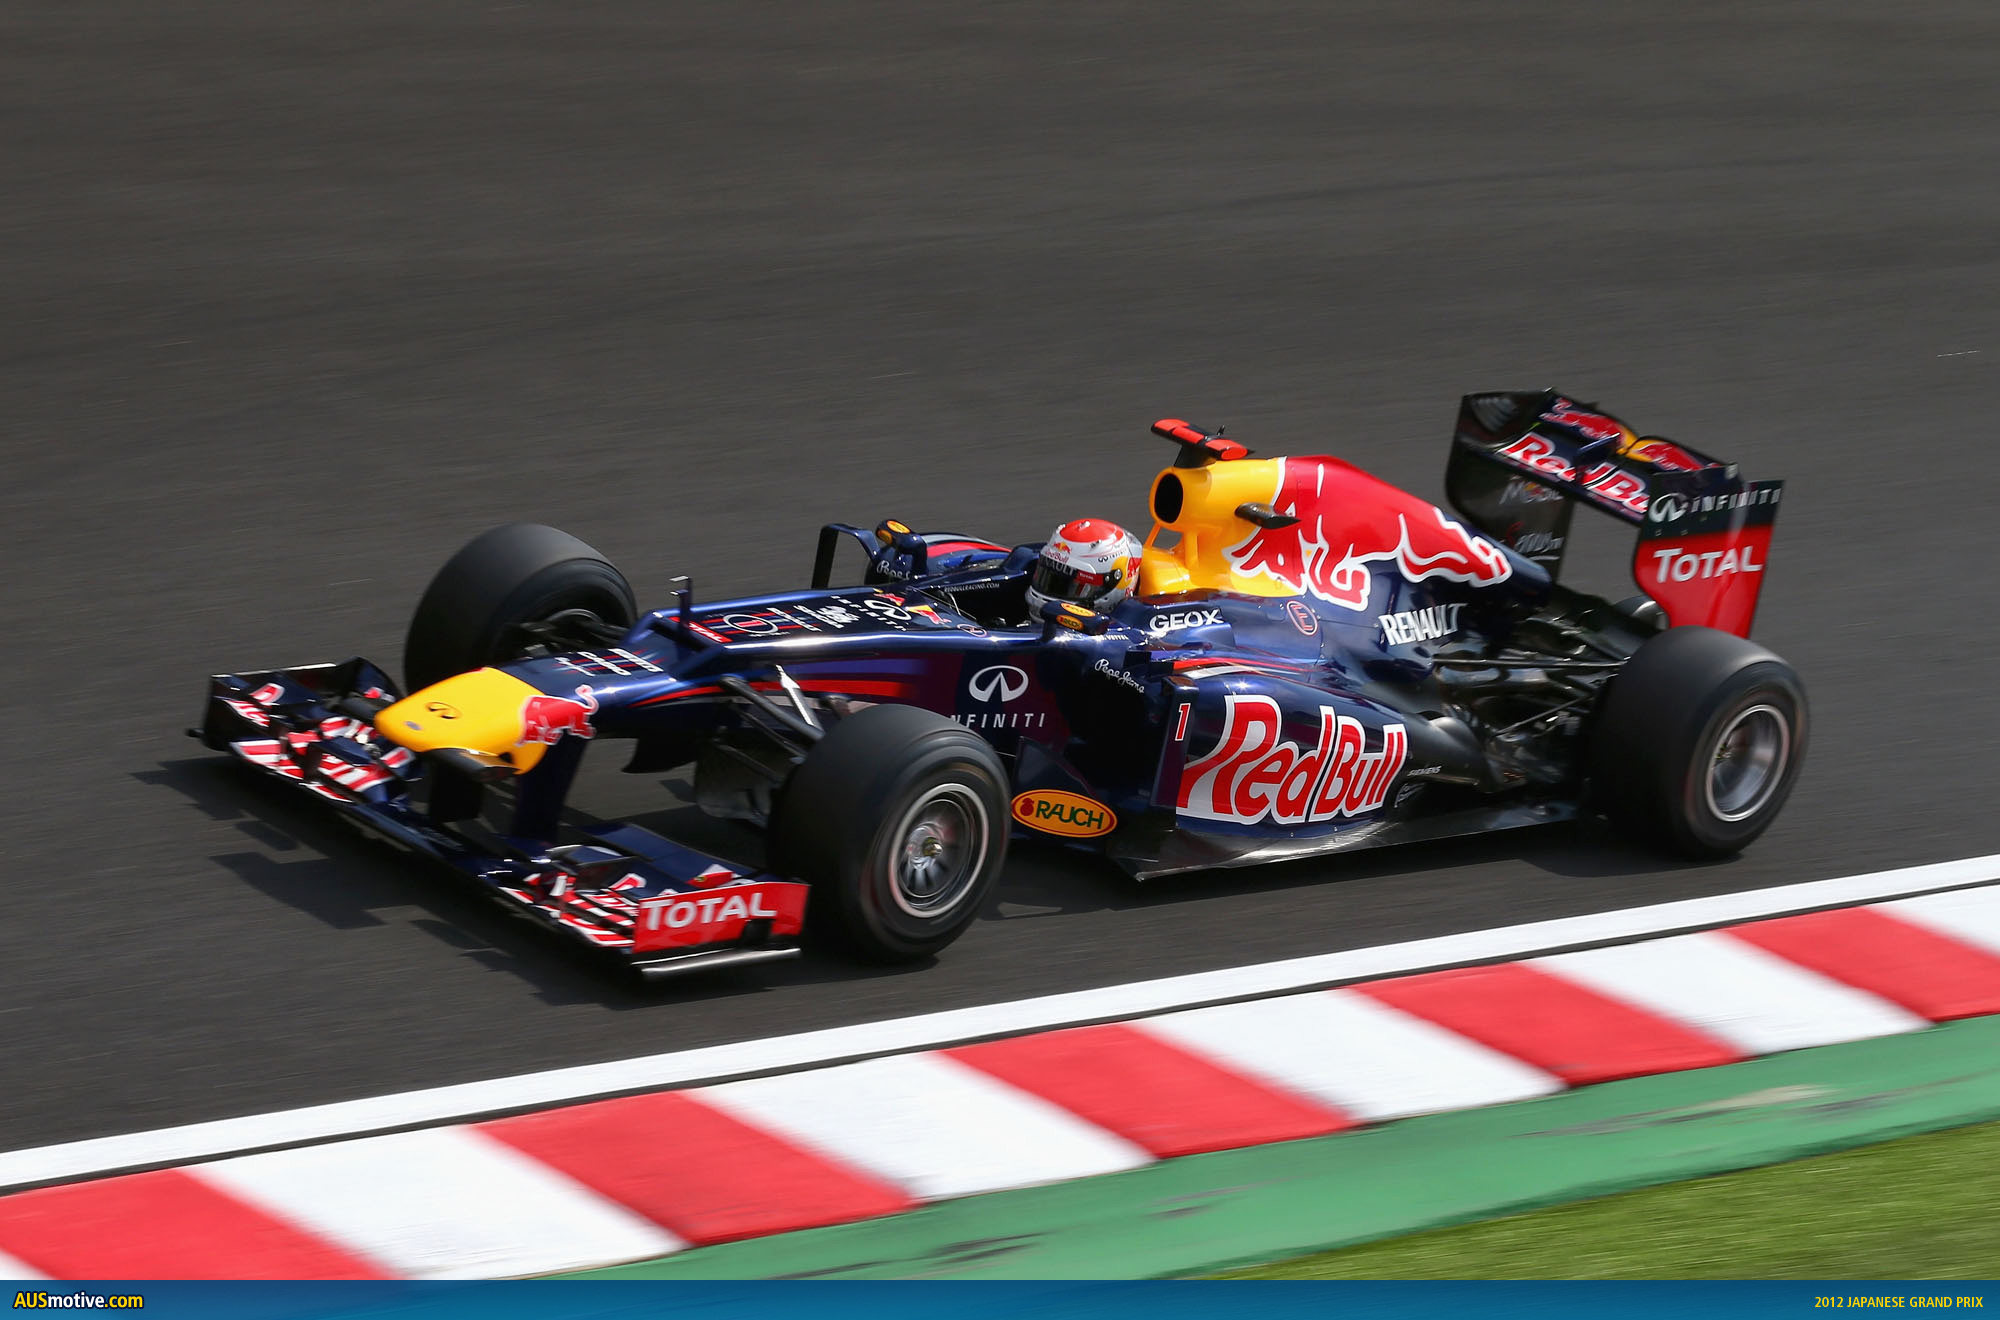 2012 Japanese Grand Prix in pictures – AUSmotive.com